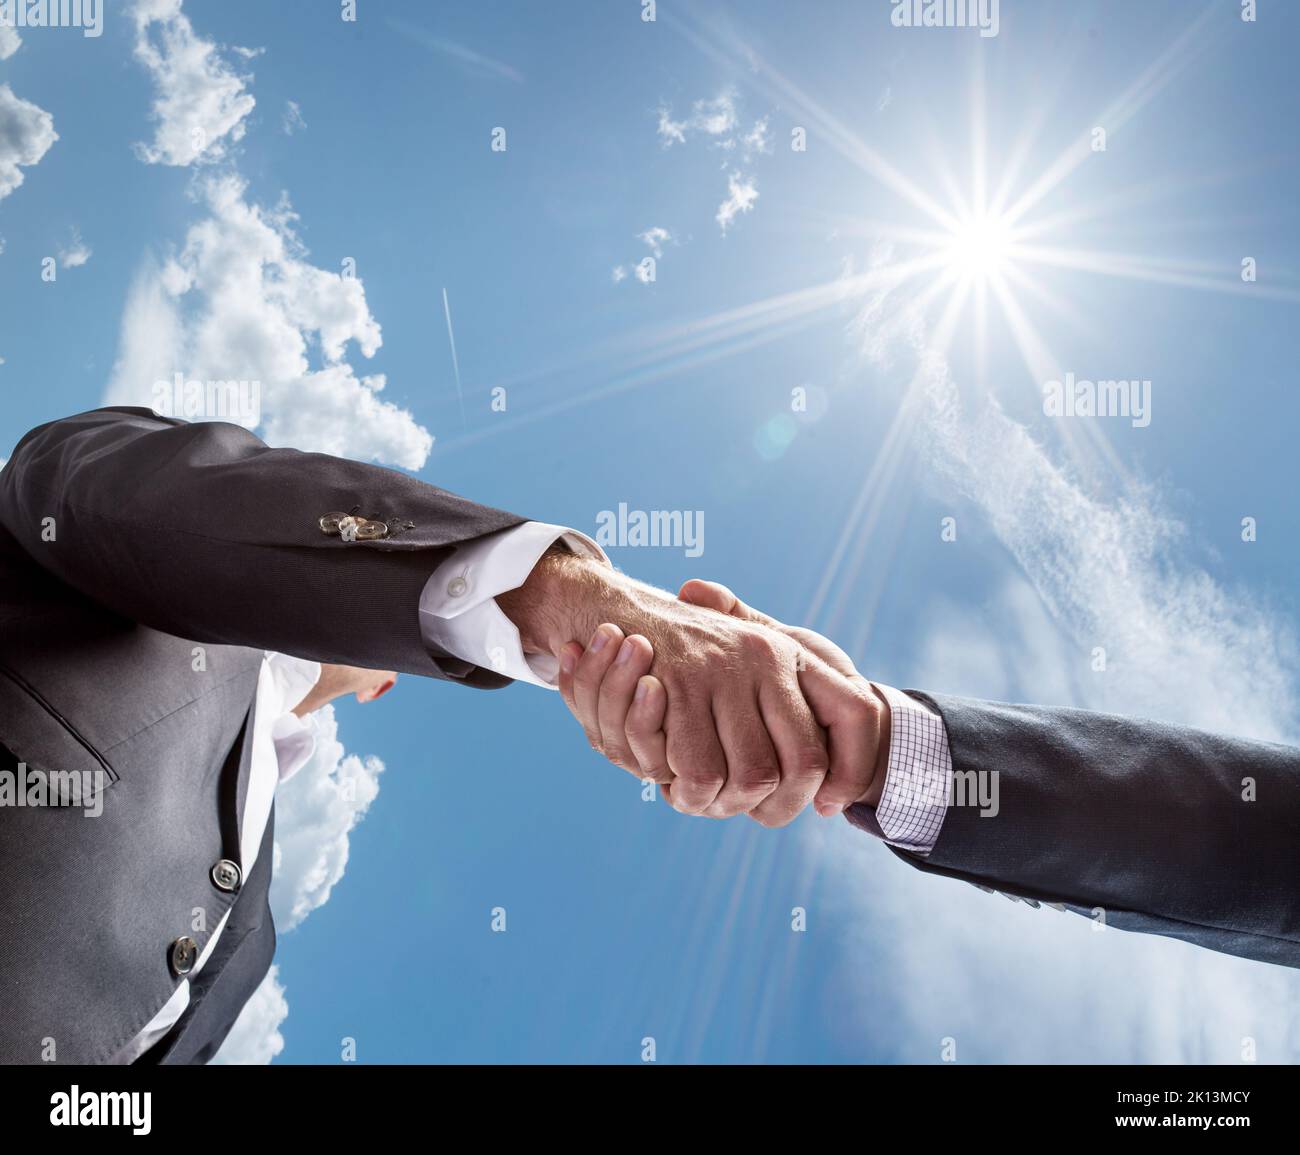 Business or political partnership concept. Close-up handshake against a blue sunny sky. Peace concept. Stock Photo